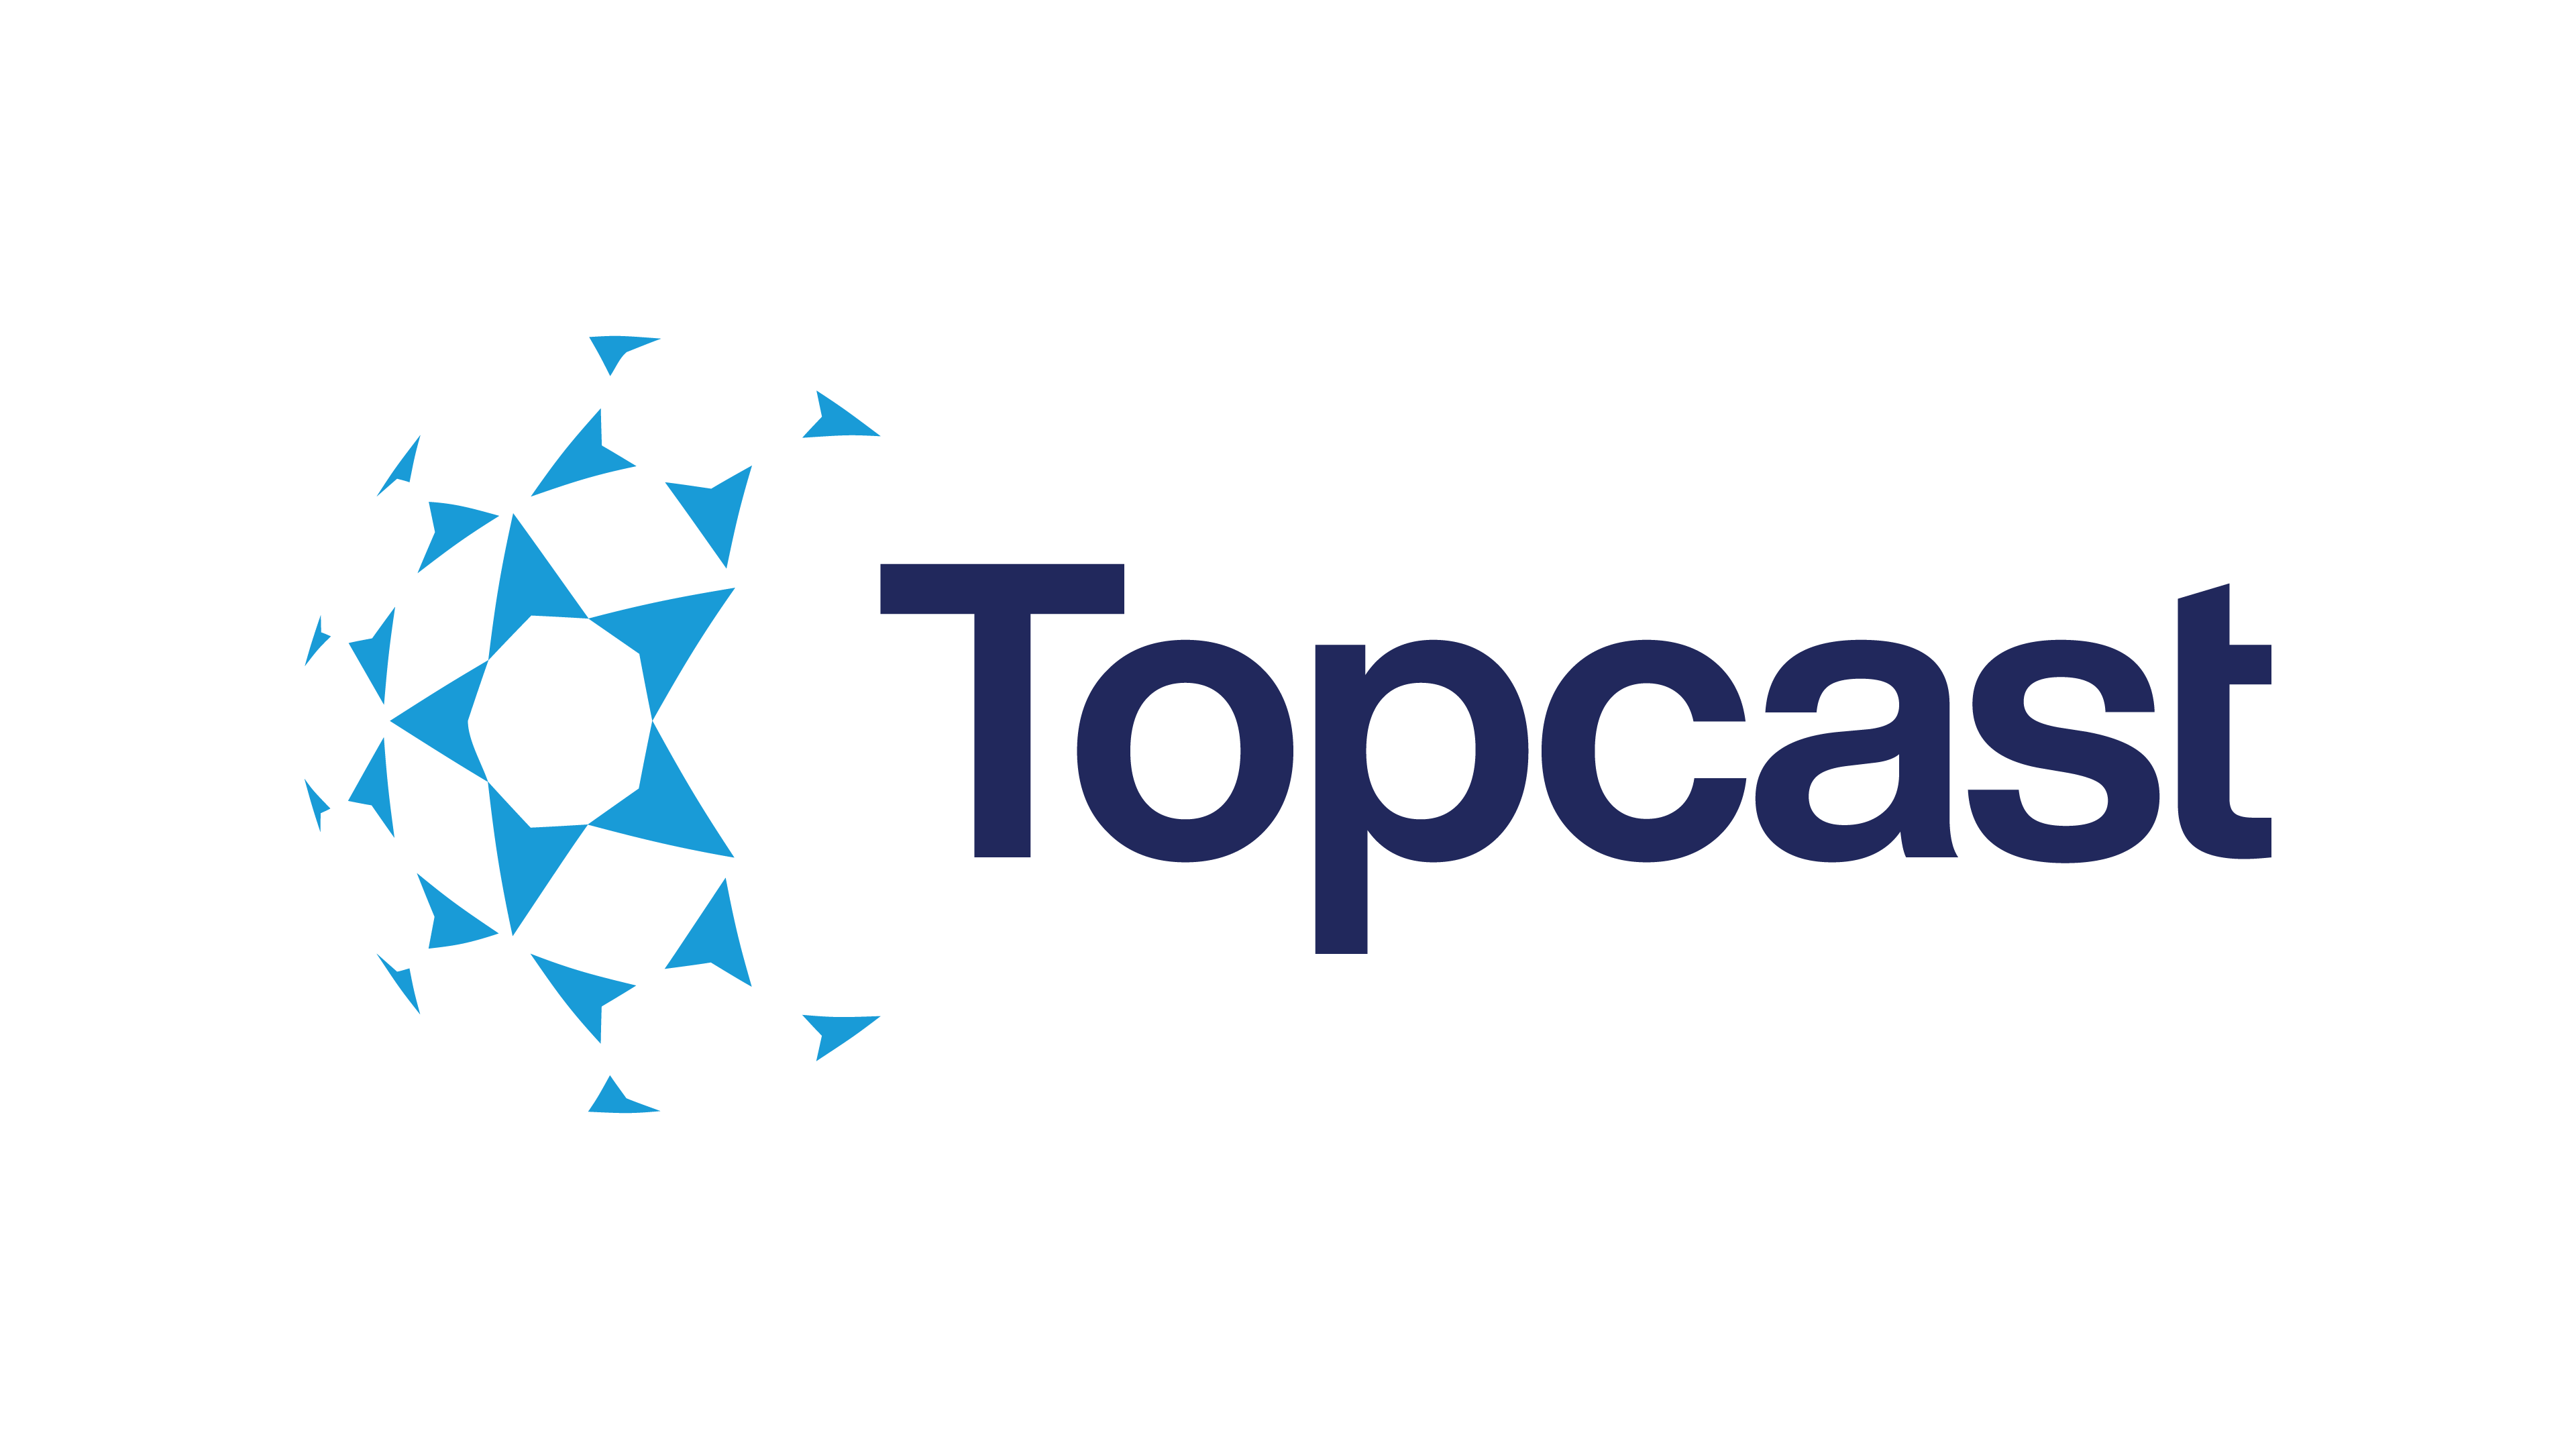 Topcast 推出全新品牌形象 以「連繫你我 共同起航」理念鞏固航空業橋樑角色